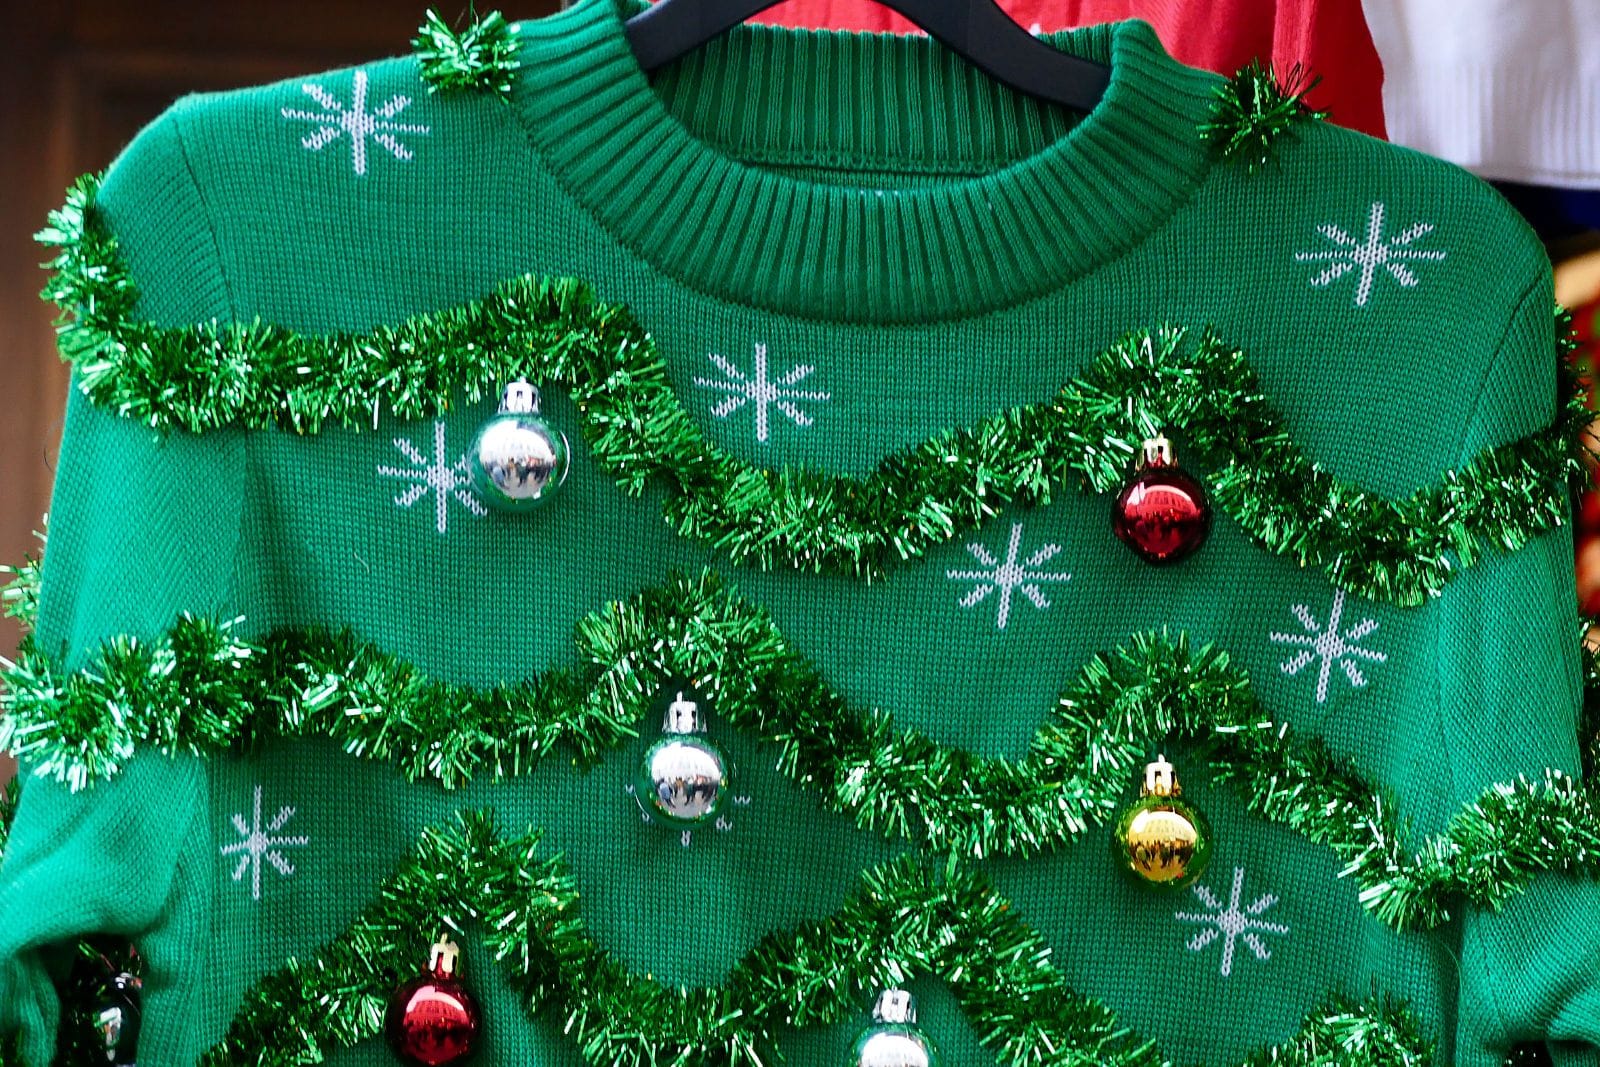 ugly Christmas sweater